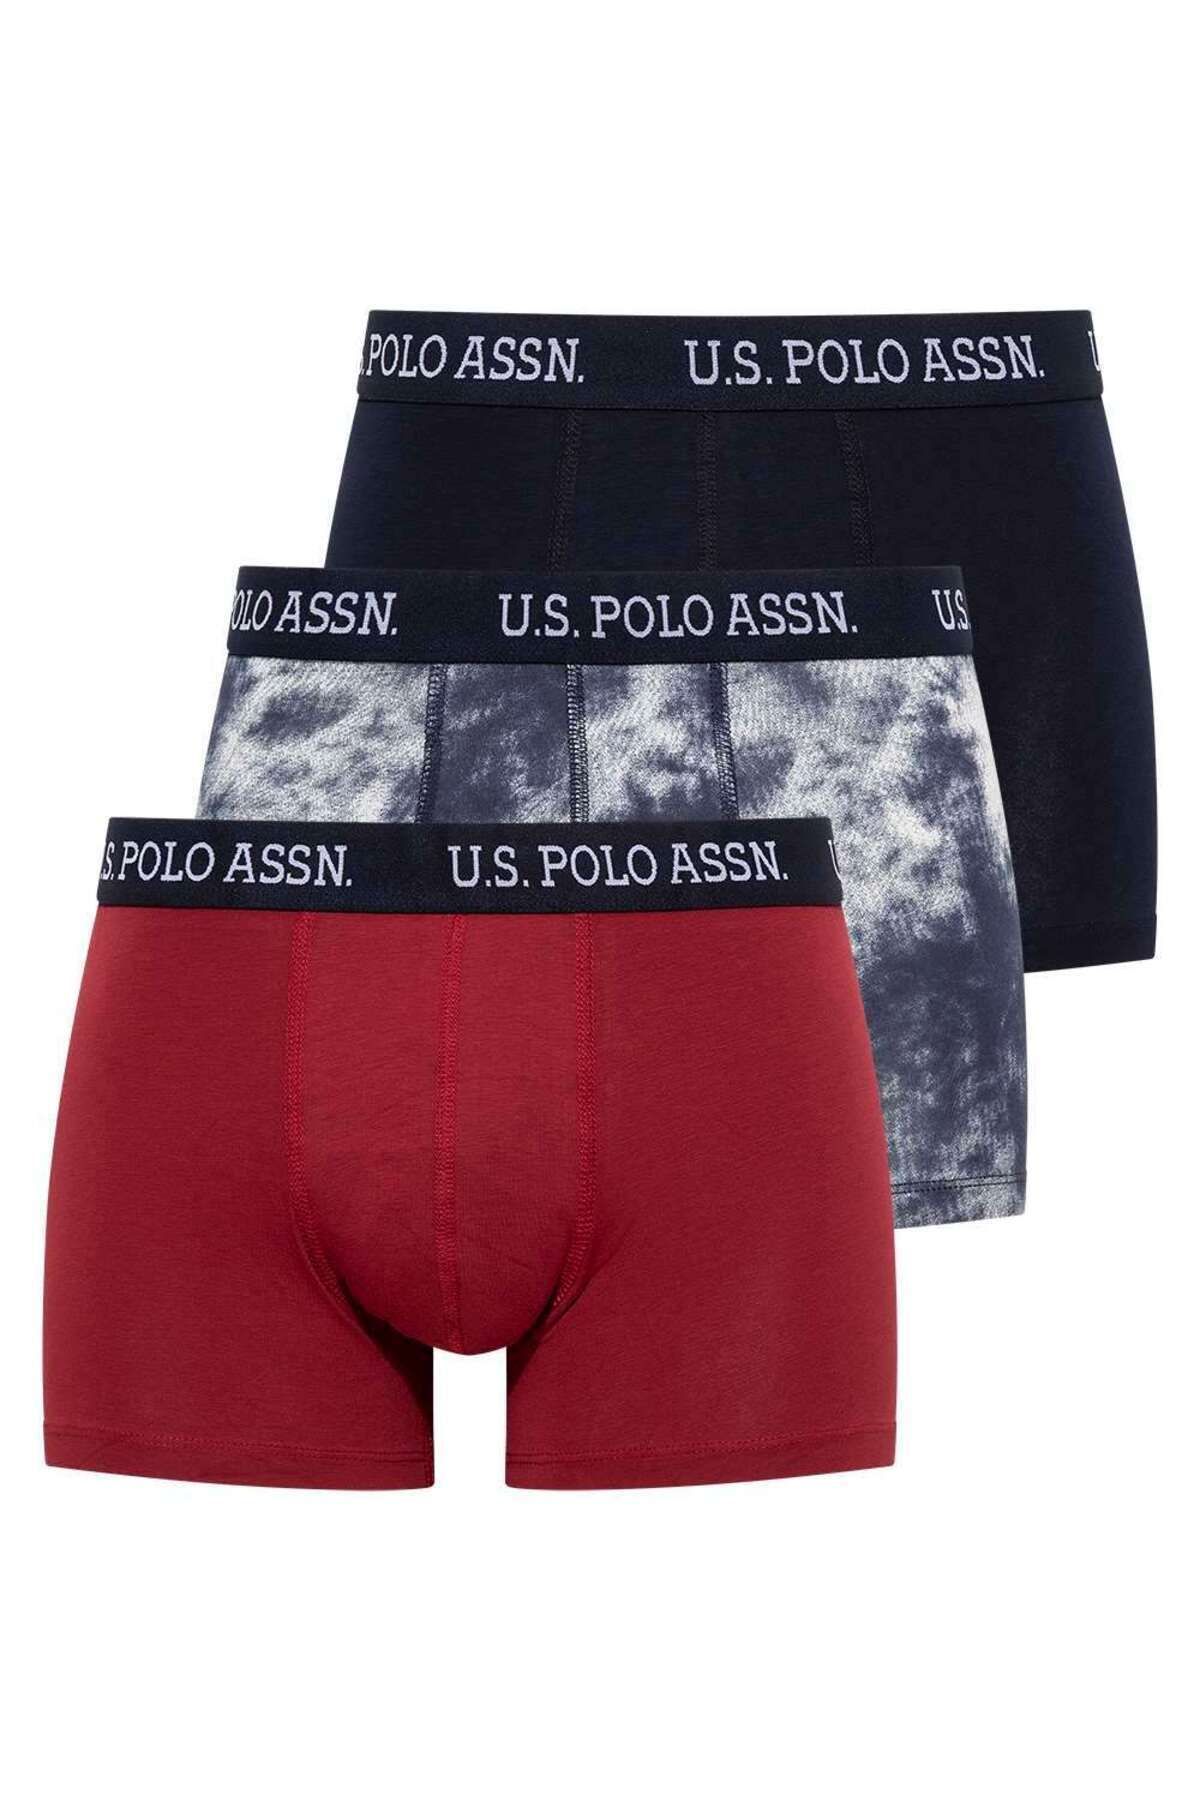 U.S. Polo Assn. U.S. Polo Assn. Erkek Lacivert - Bordo - Baskılı 3 Lü Boxer